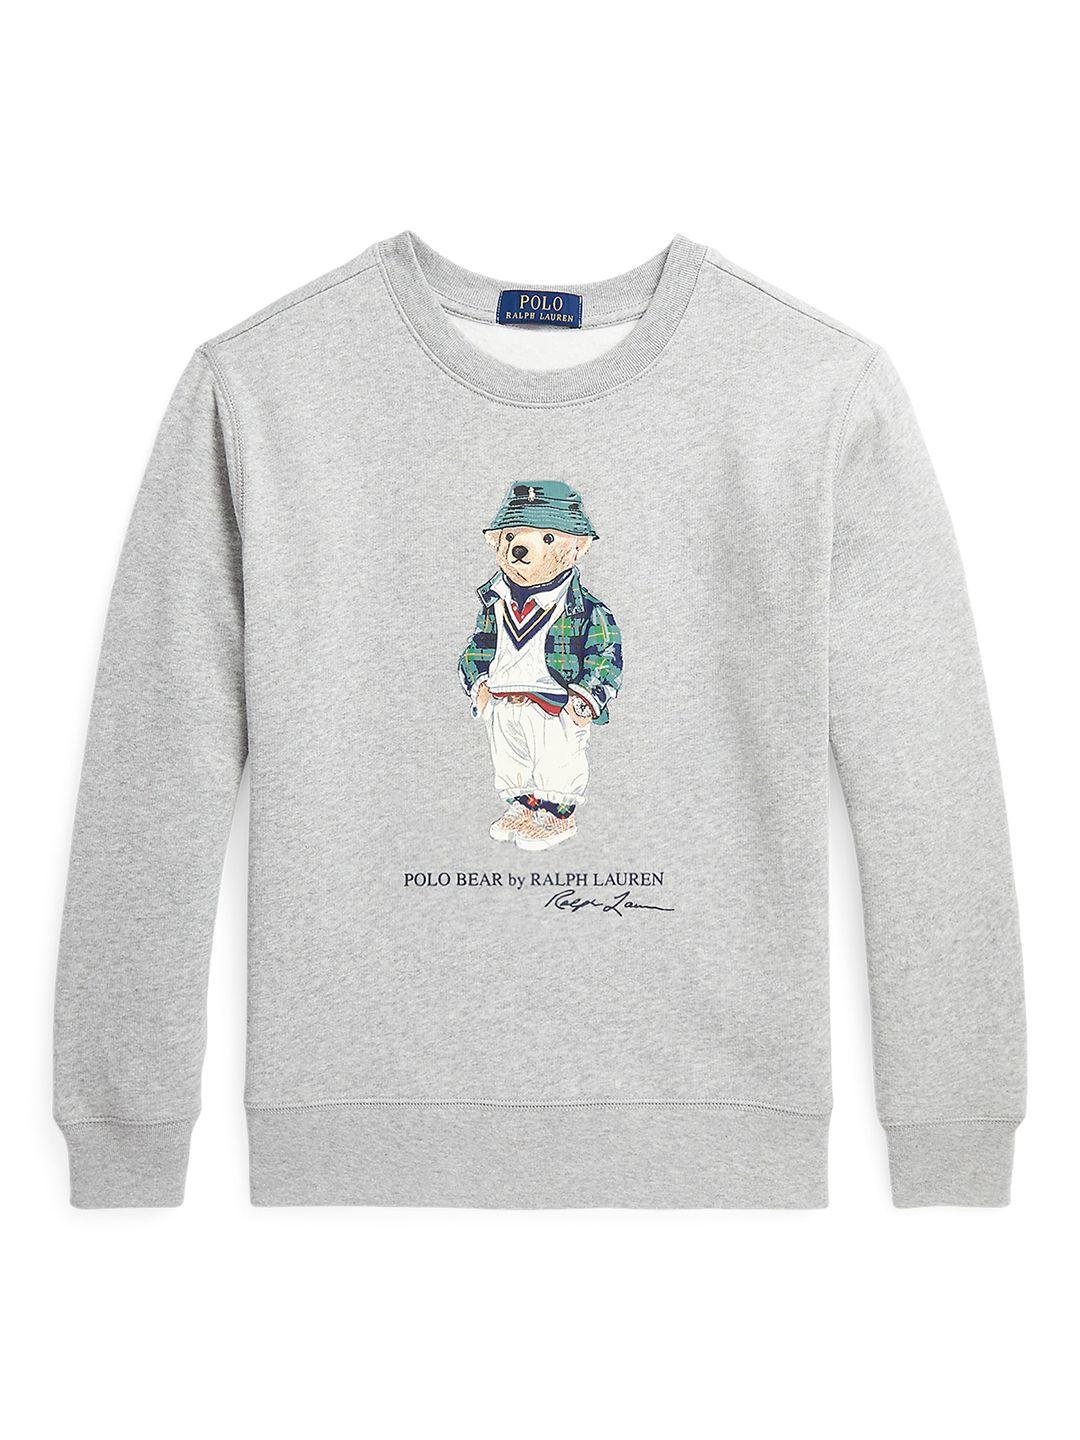 polo-ralph-lauren-polo-bear-graphic-printed-cotton-sweatshirt